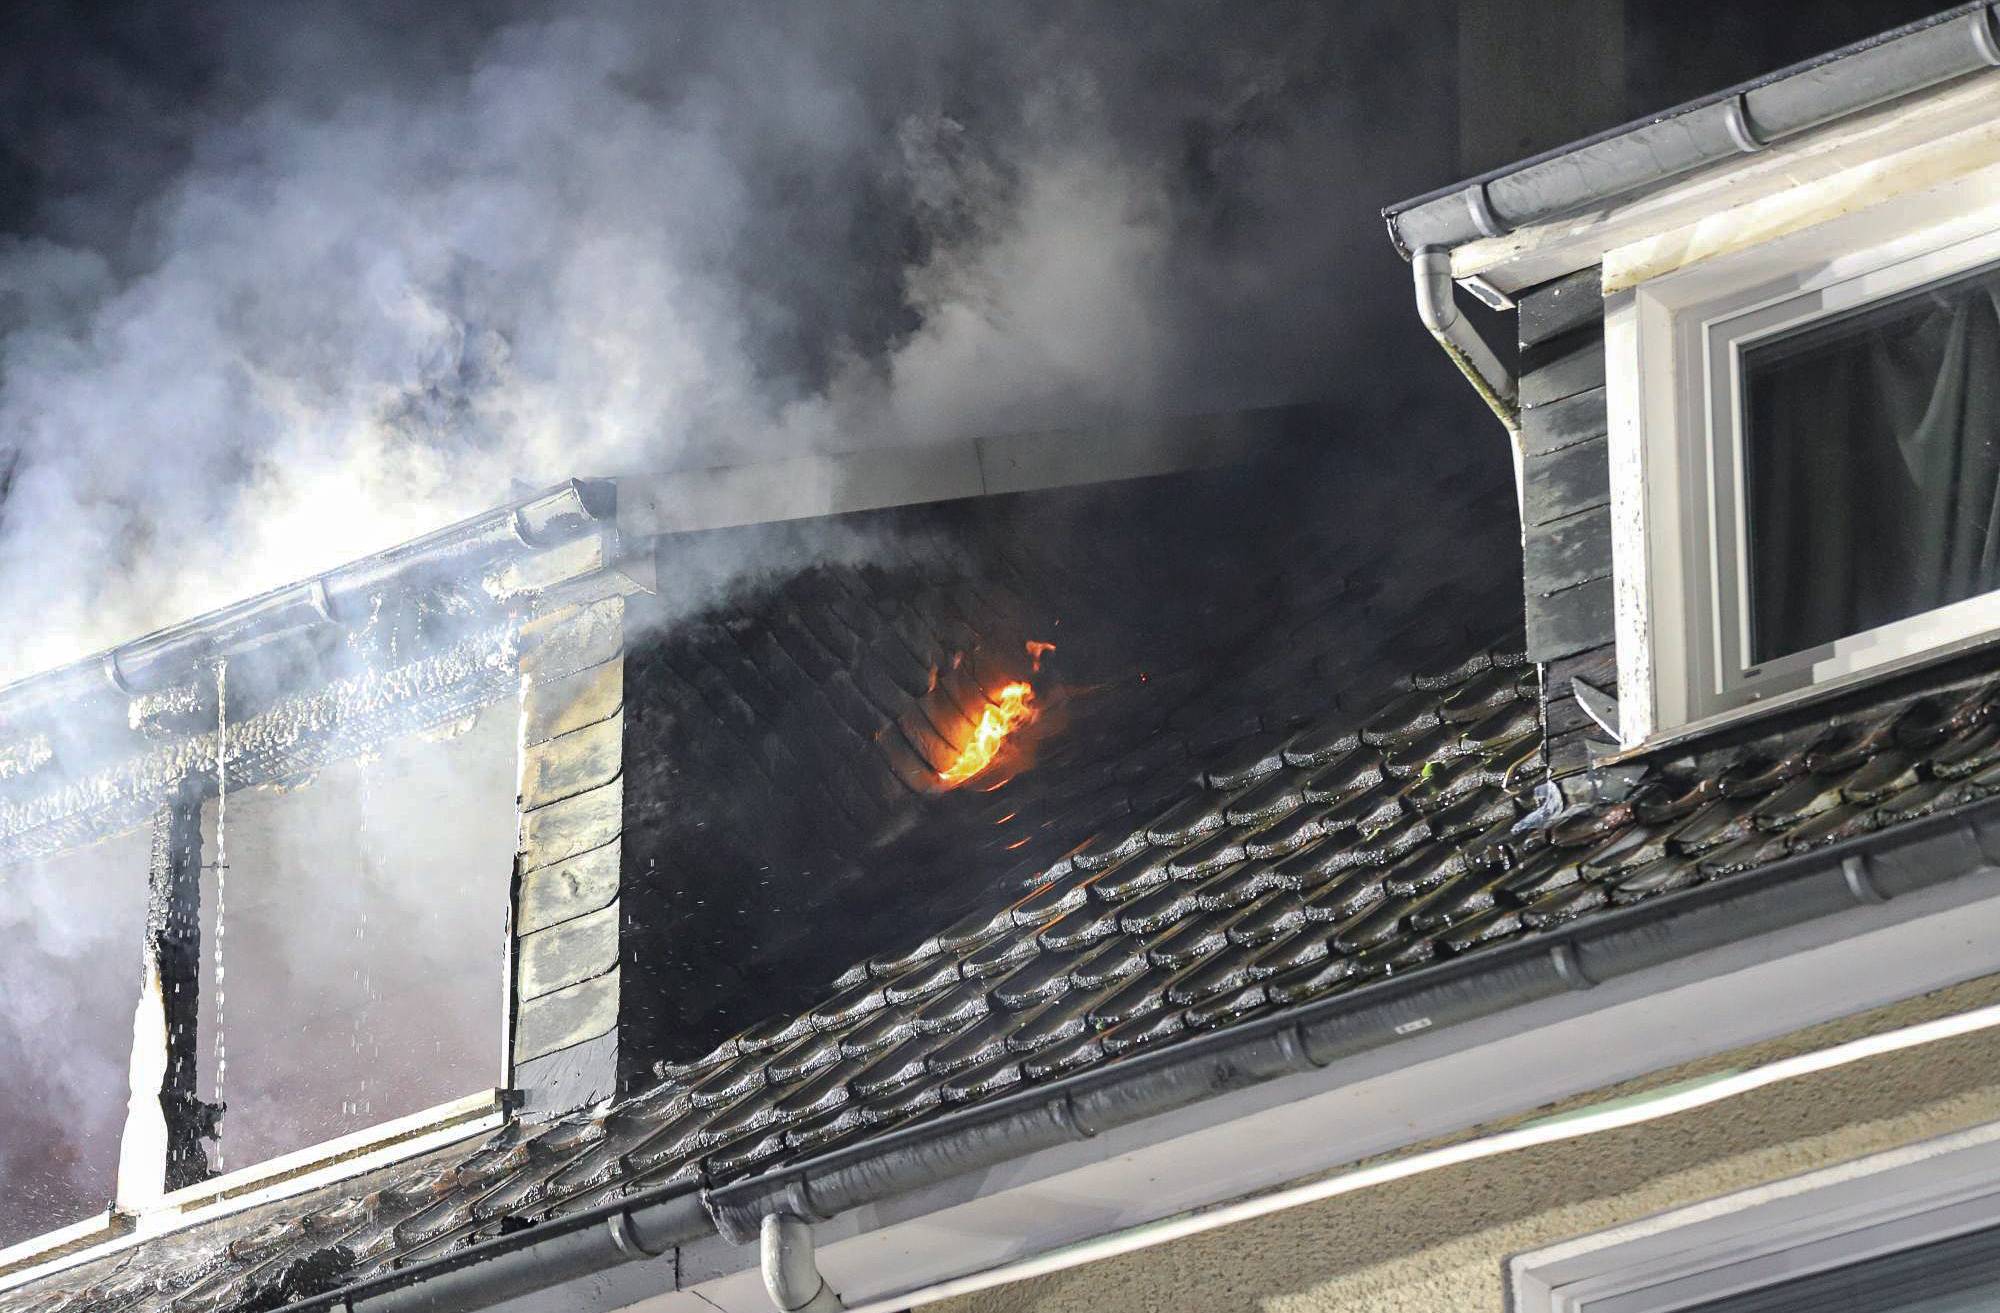 Dachgeschosswohnung brannte in Wuppertal-Barmen komplett aus